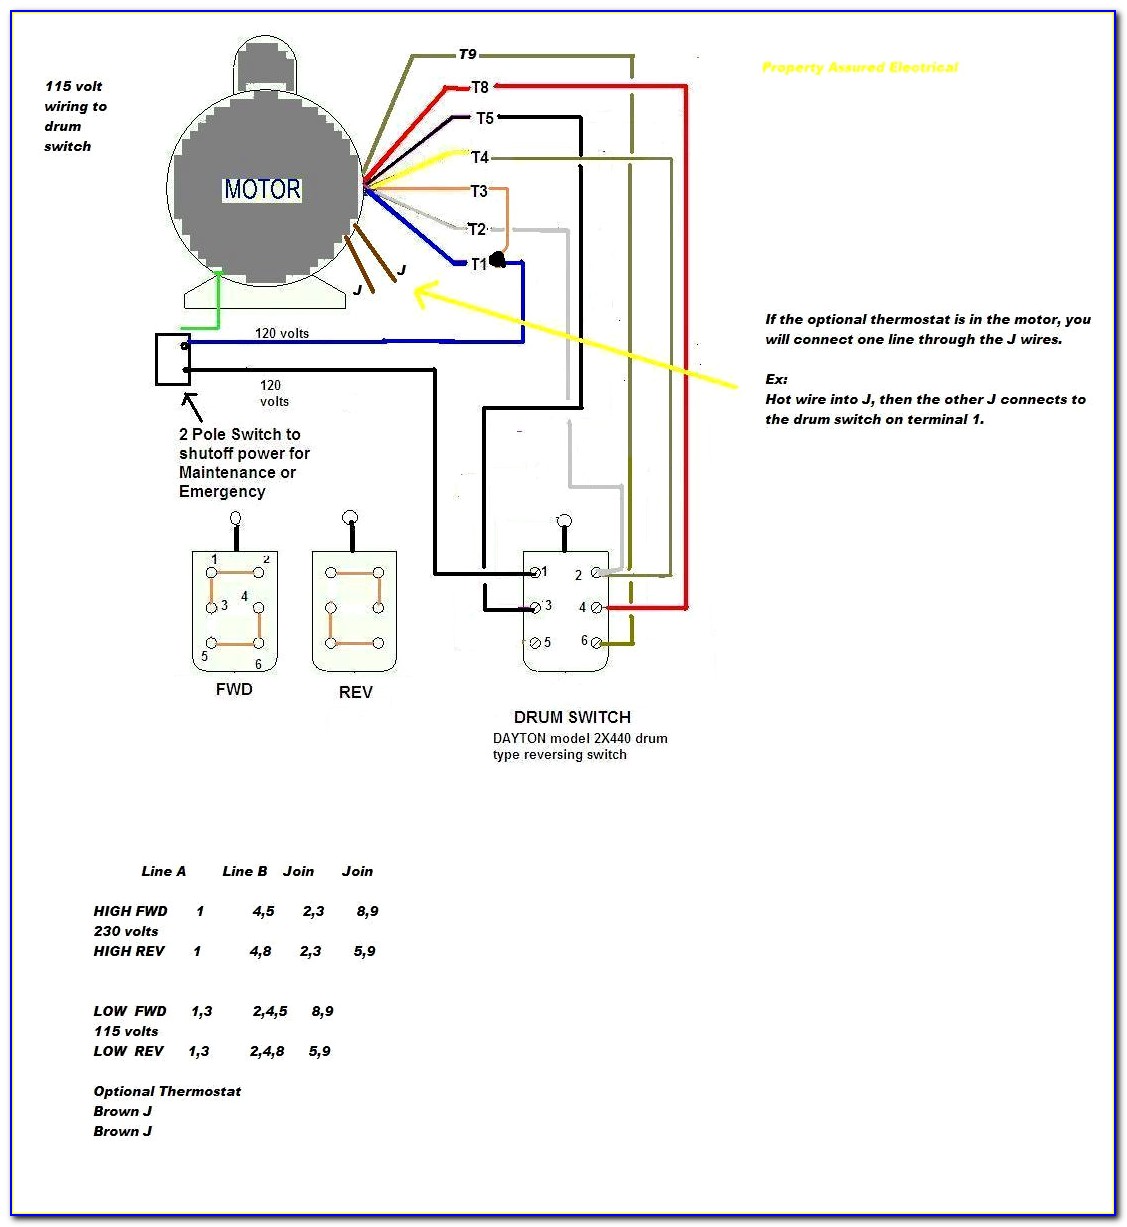 Capacitor Wiring Diagram In Ceiling Fan